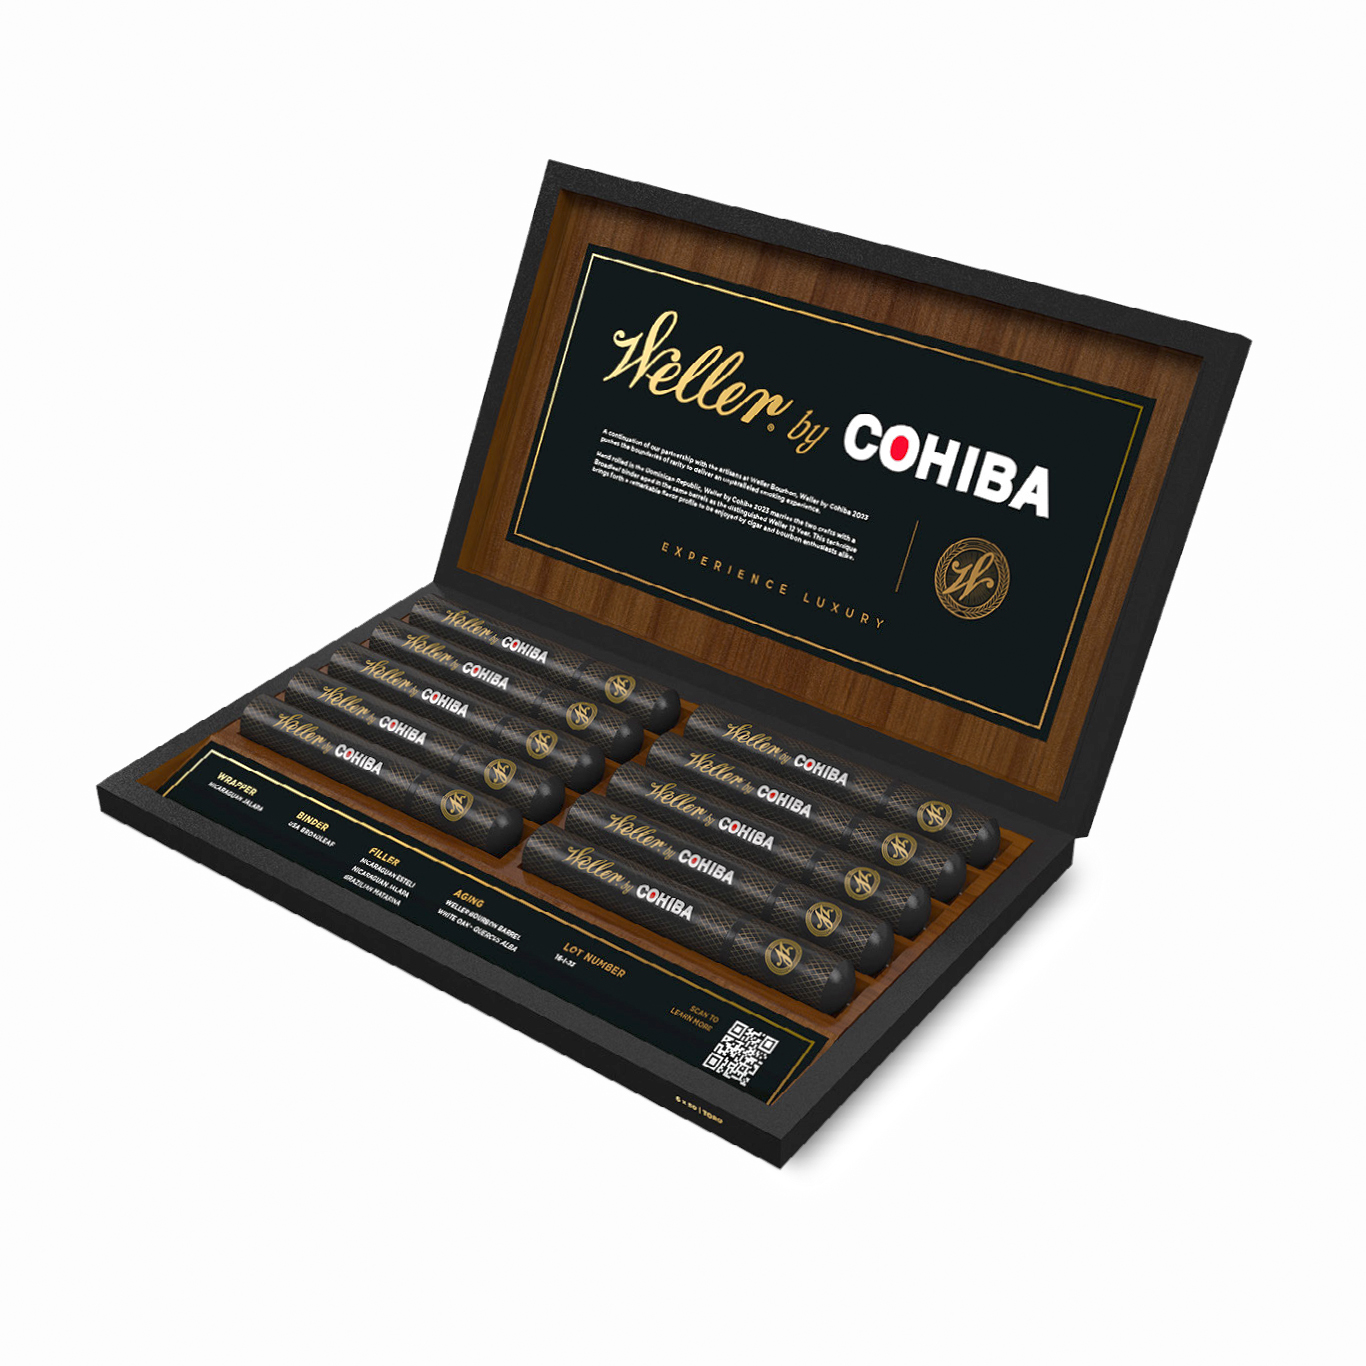 A box of Cohiba Weller Toro cigars in an aluminum tube